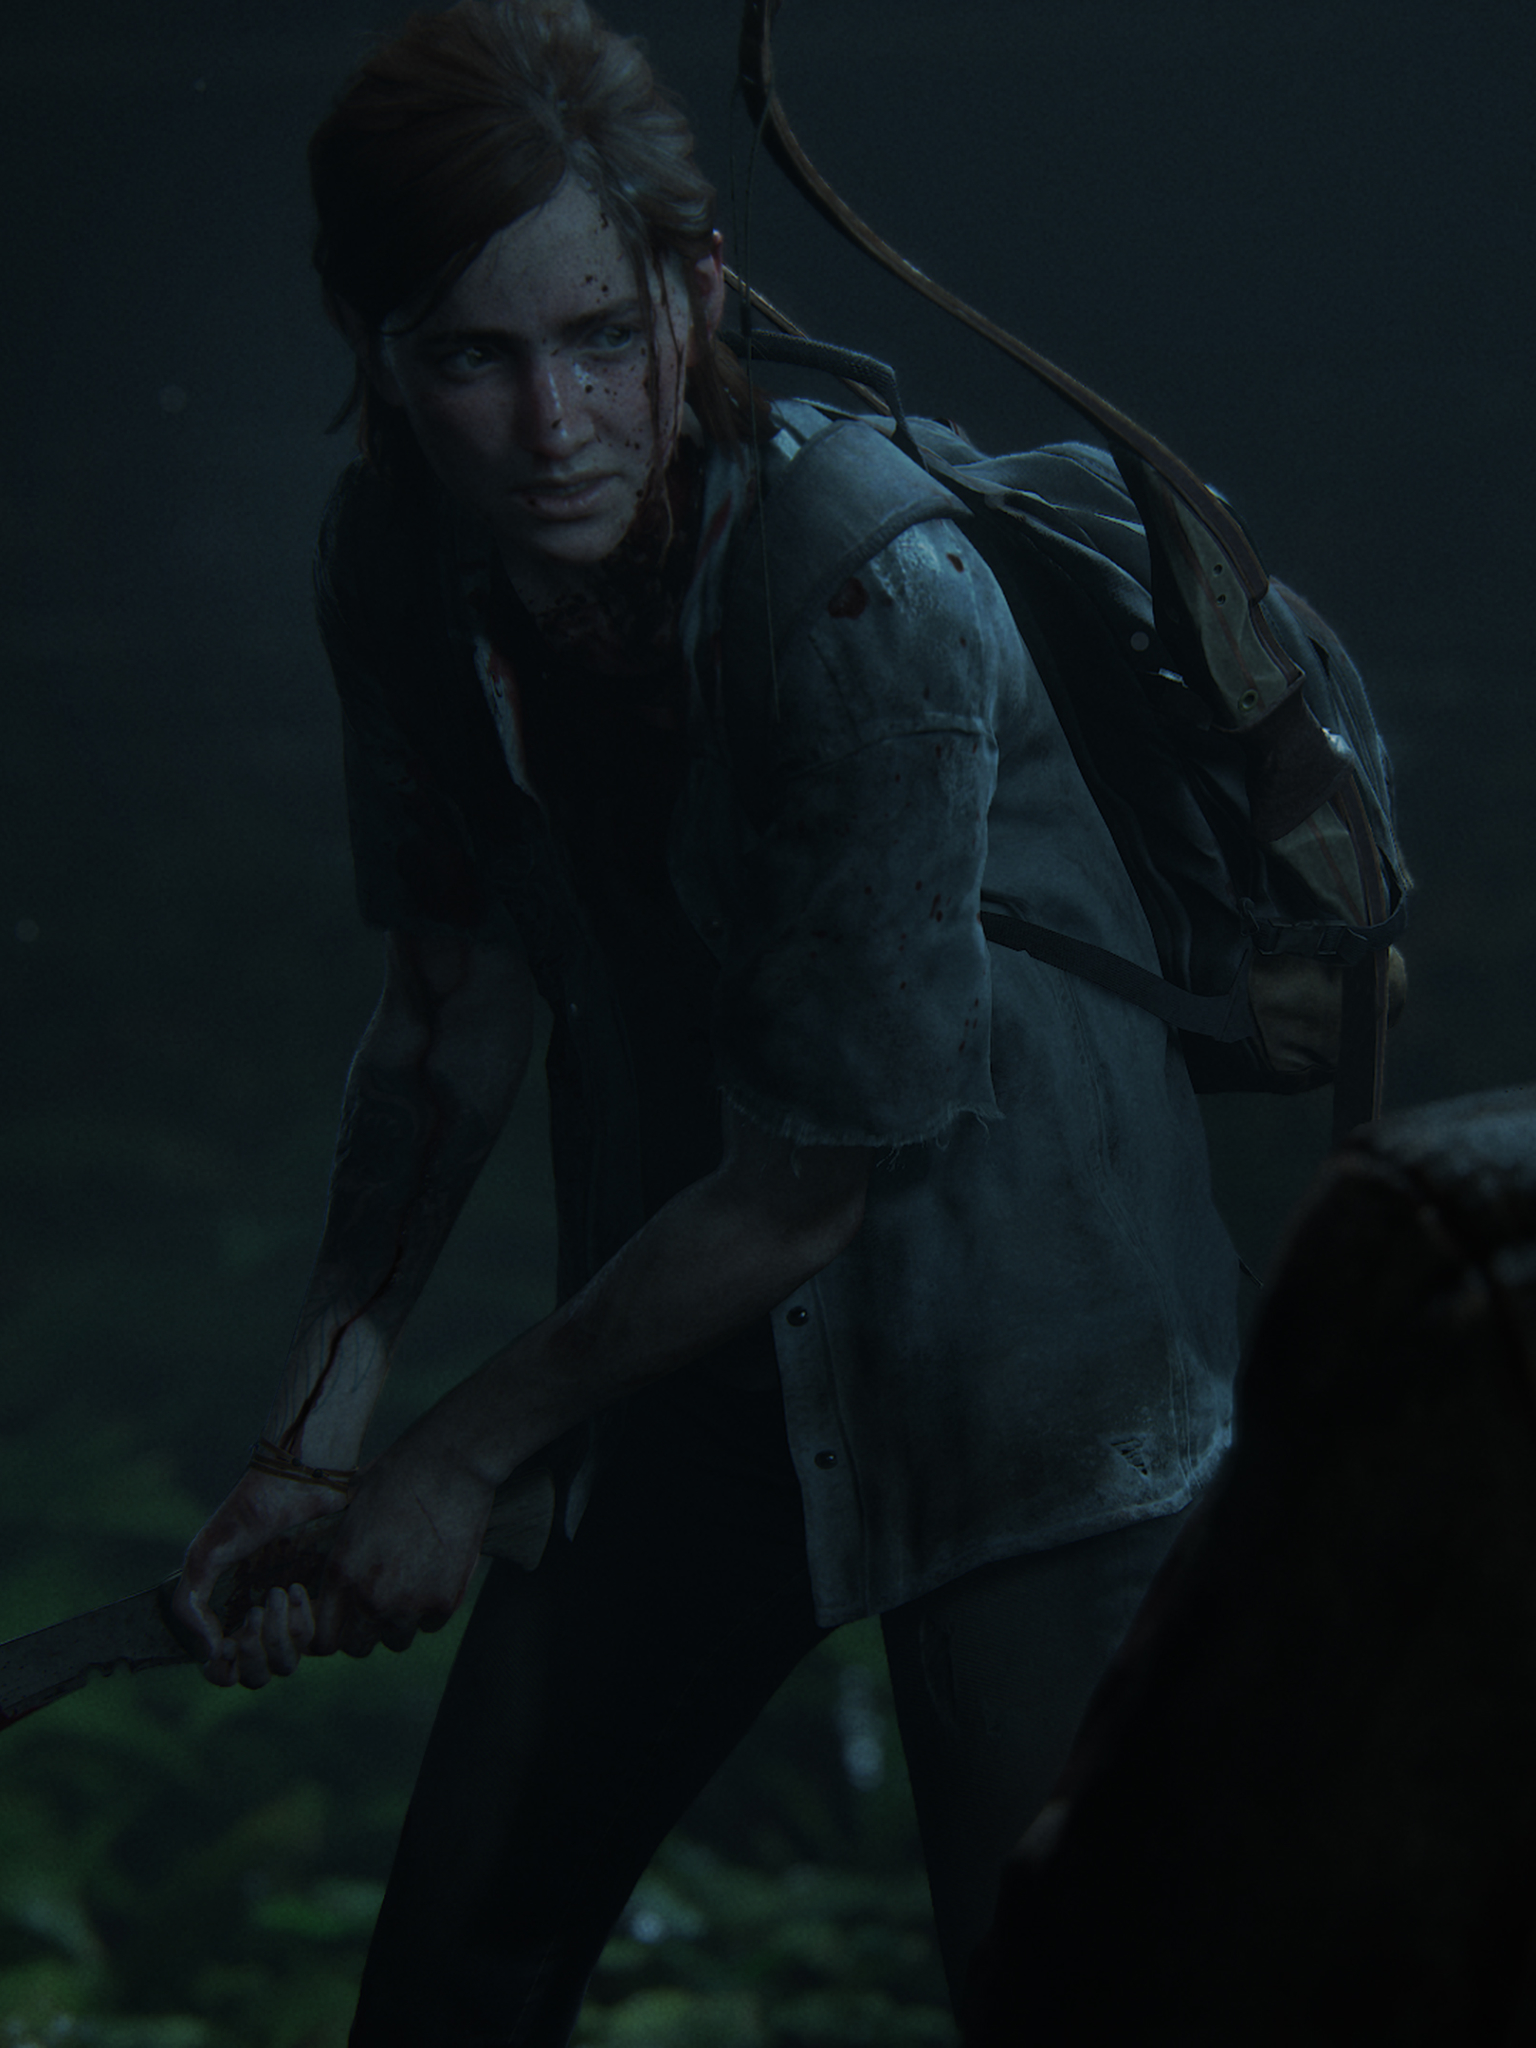 Ellie The Last of Us II 4K Ultra HD Mobile Wallpaper